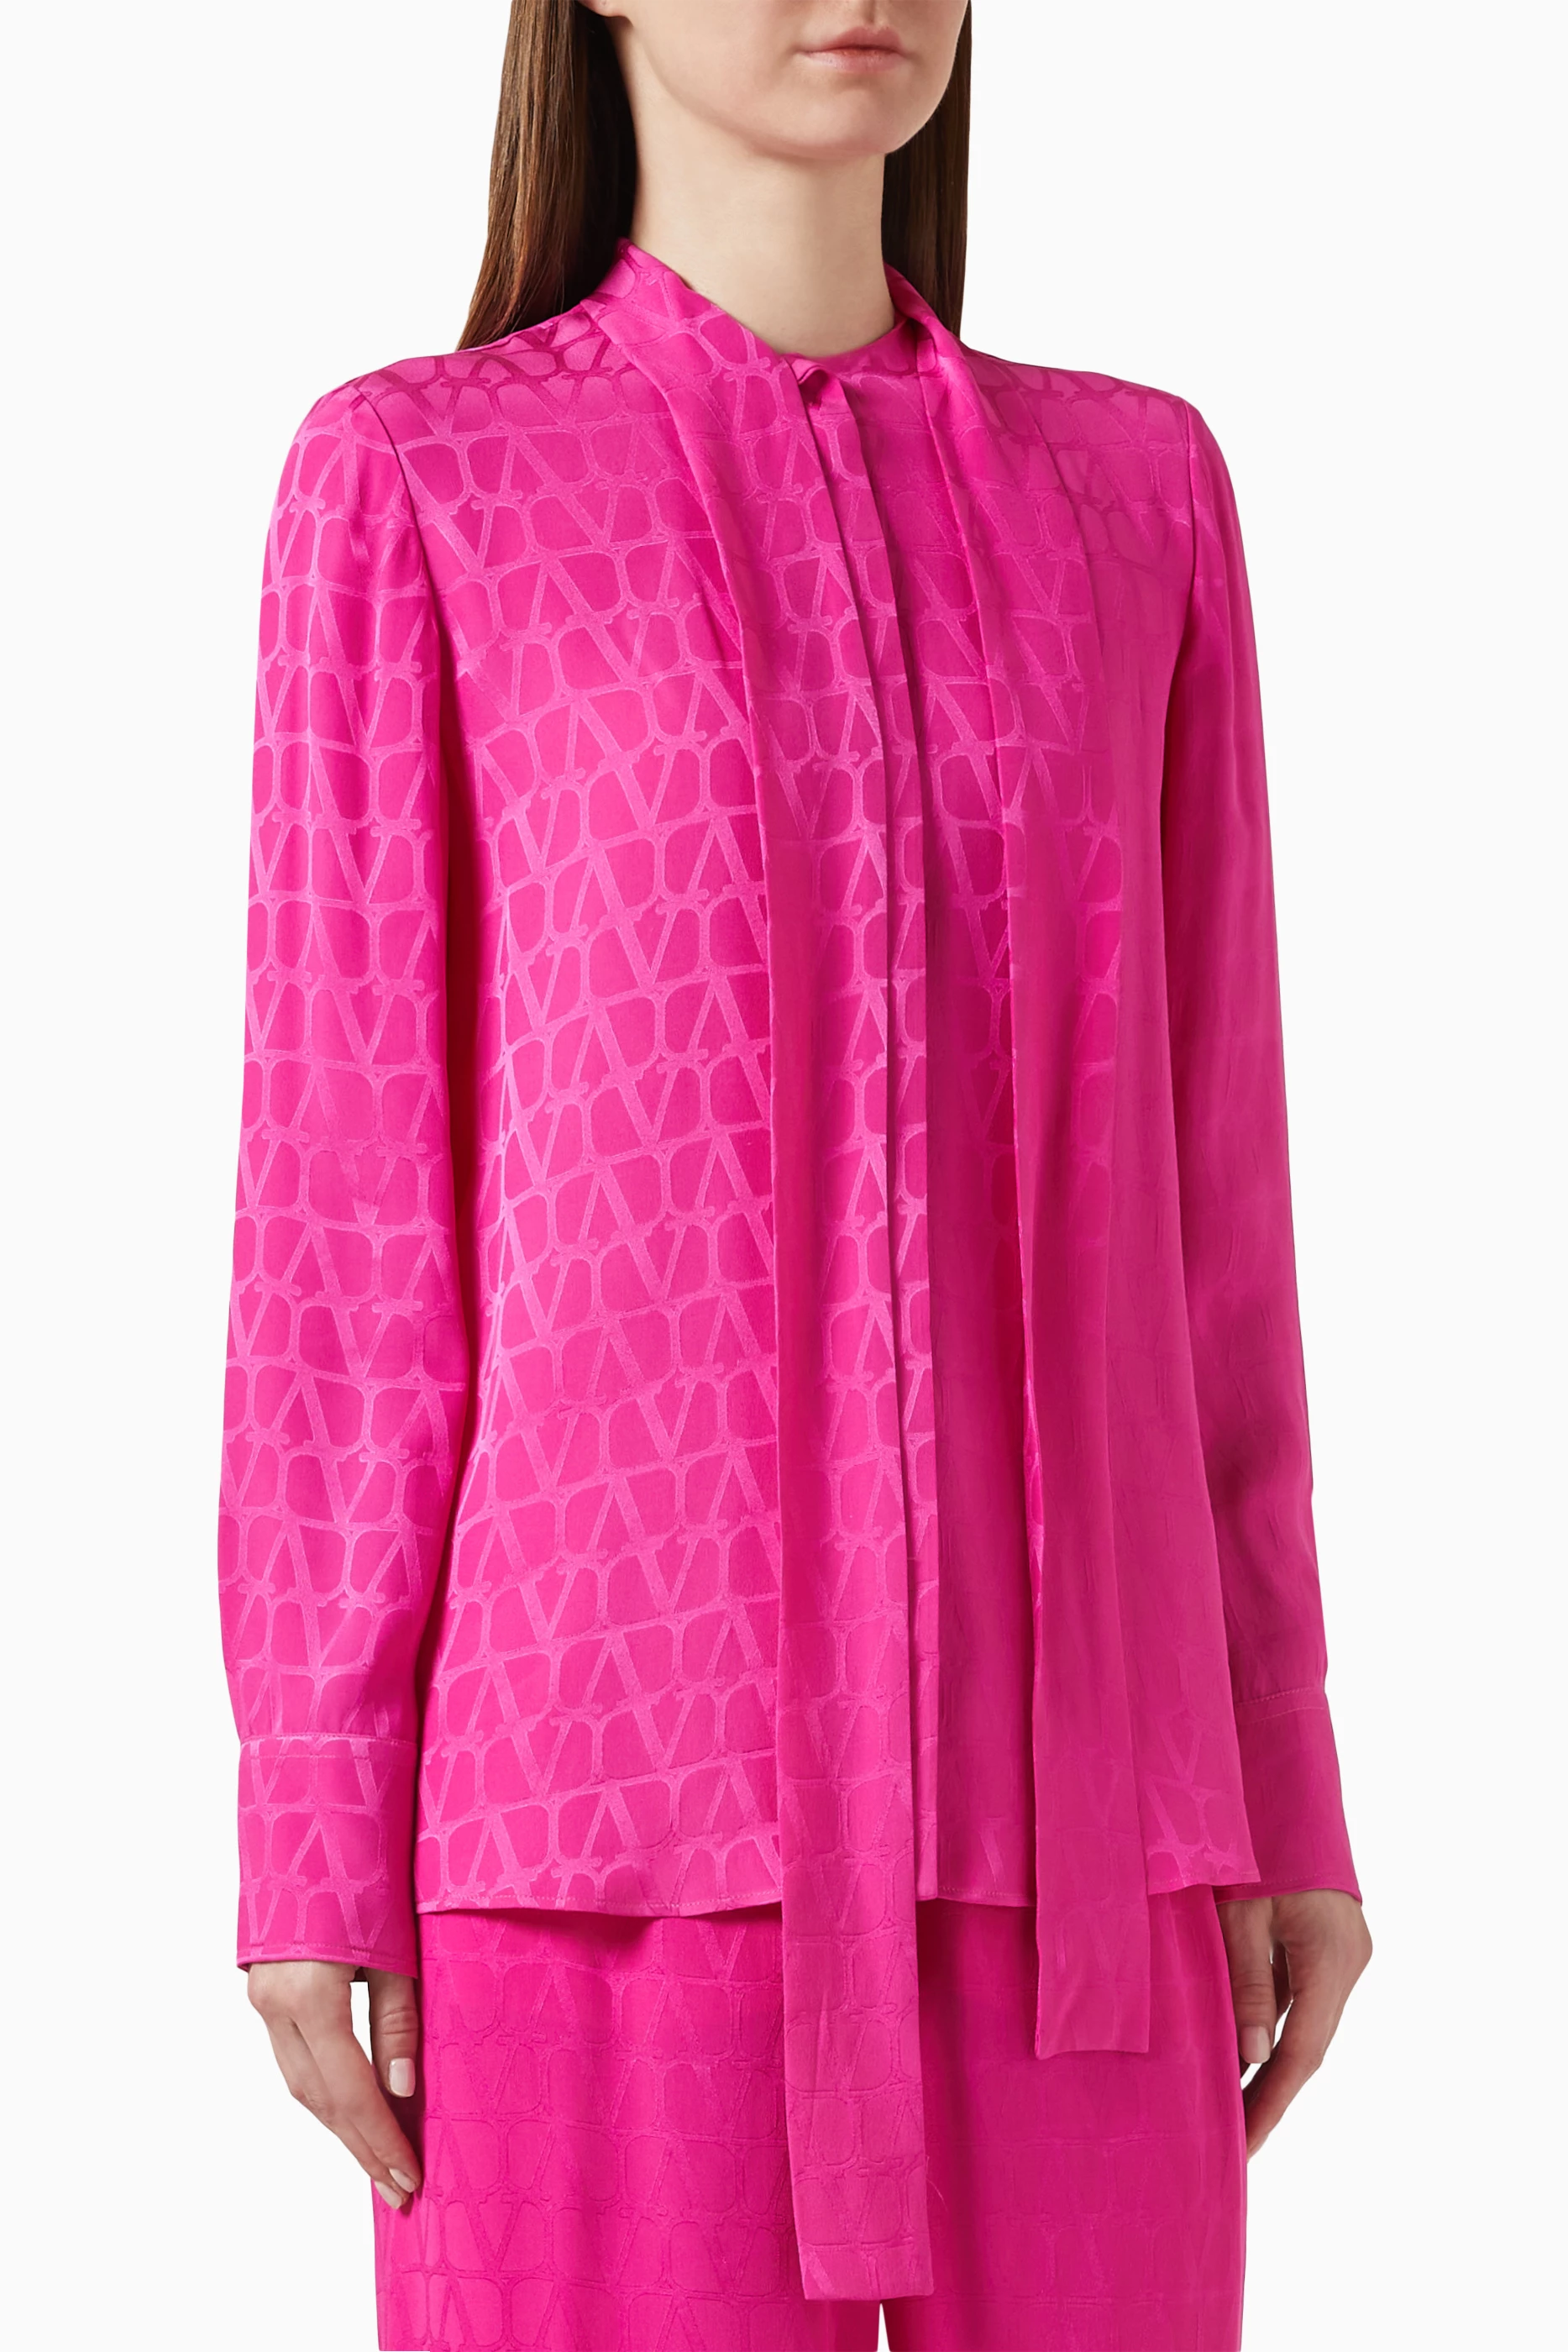 Valentino Garavani V-logo silk blouse - Pink